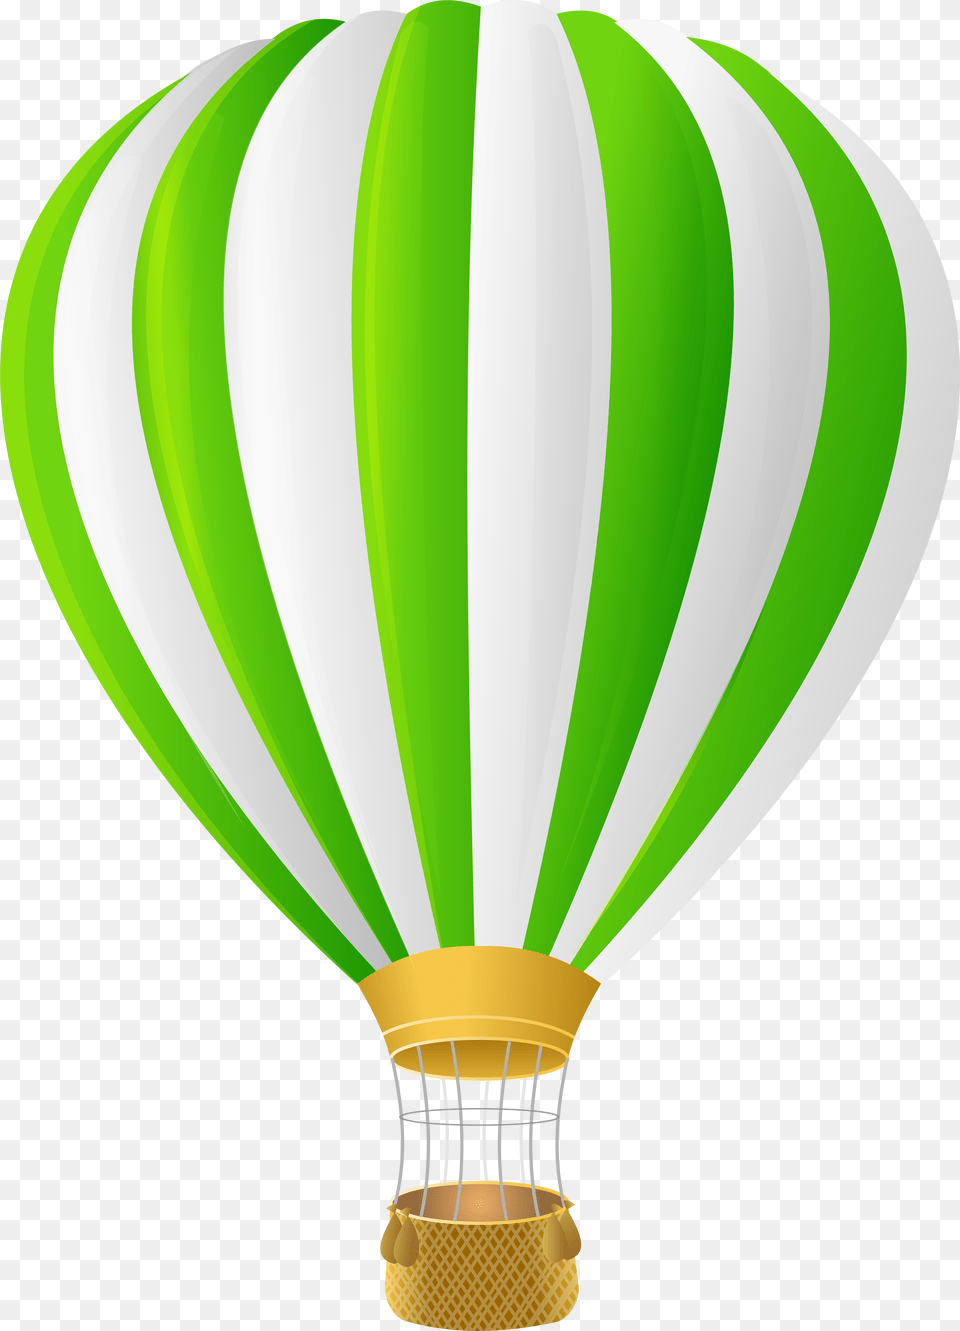 Hot Air Balloon Clipart At Getdrawings Hot Air Balloon Clipart Background, Aircraft, Hot Air Balloon, Transportation, Vehicle Free Transparent Png